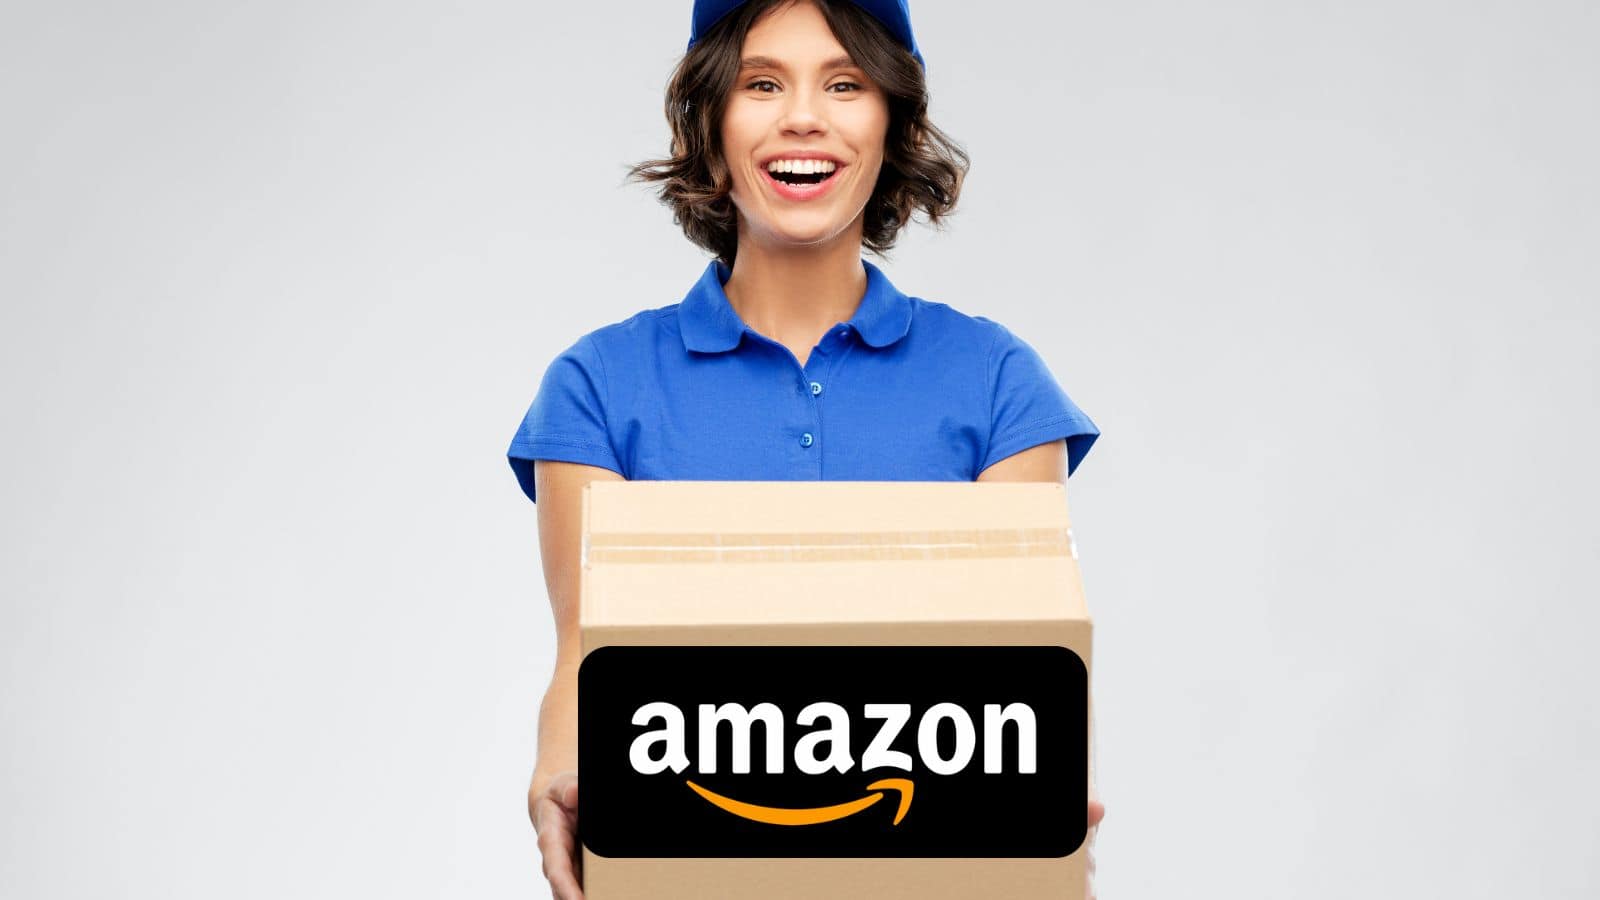 Amazon da PAZZI: regala gratis OFFERTE tech al 90% solo oggi